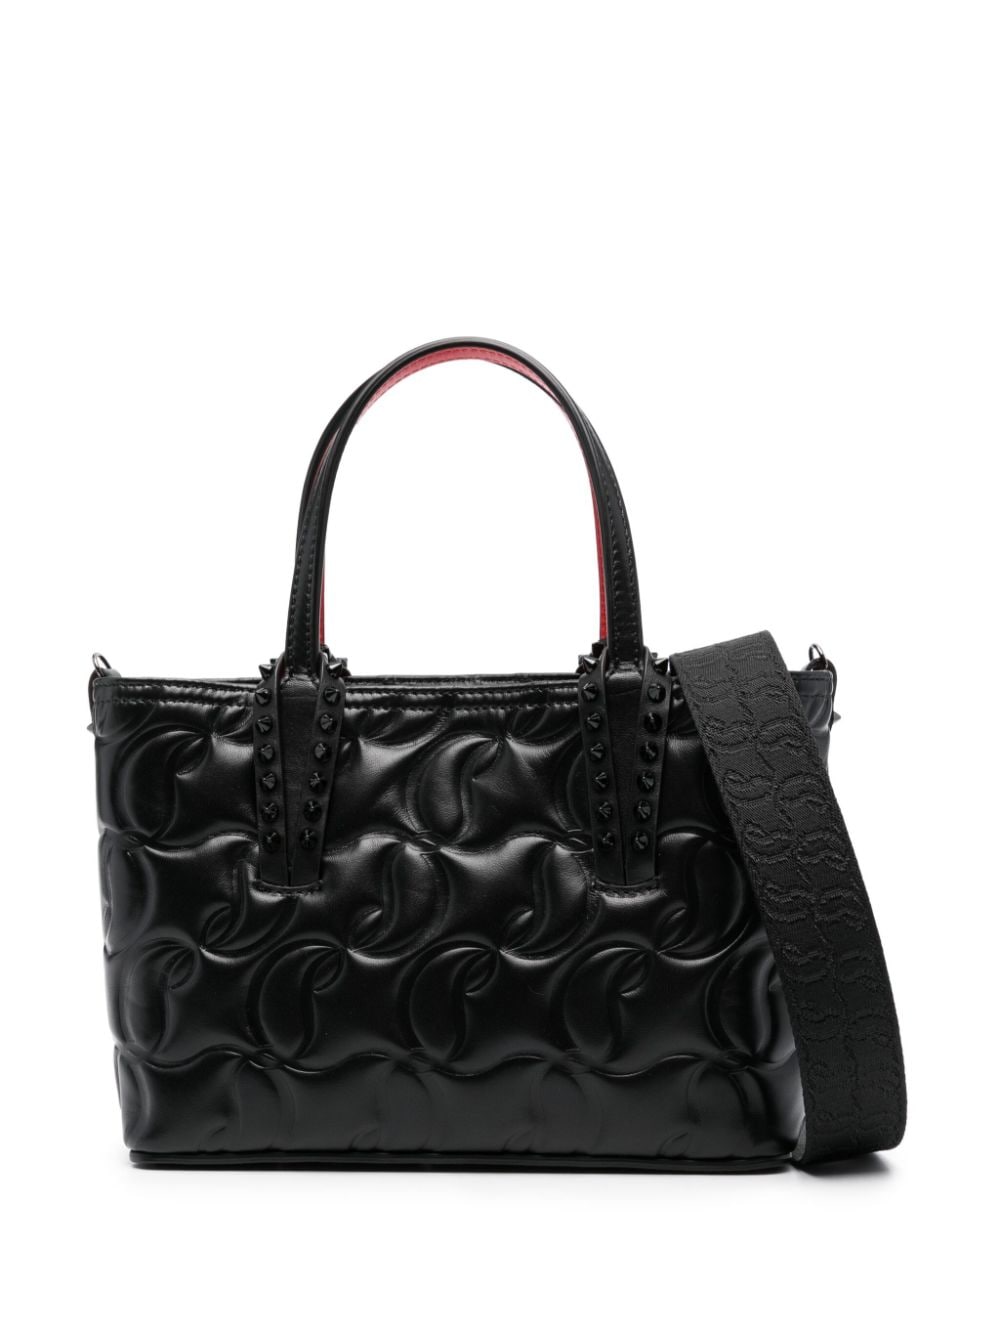 CHRISTIAN LOUBOUTIN Black Nappa Leather Debossed Monogram Handbag with Spike Stud Detailing